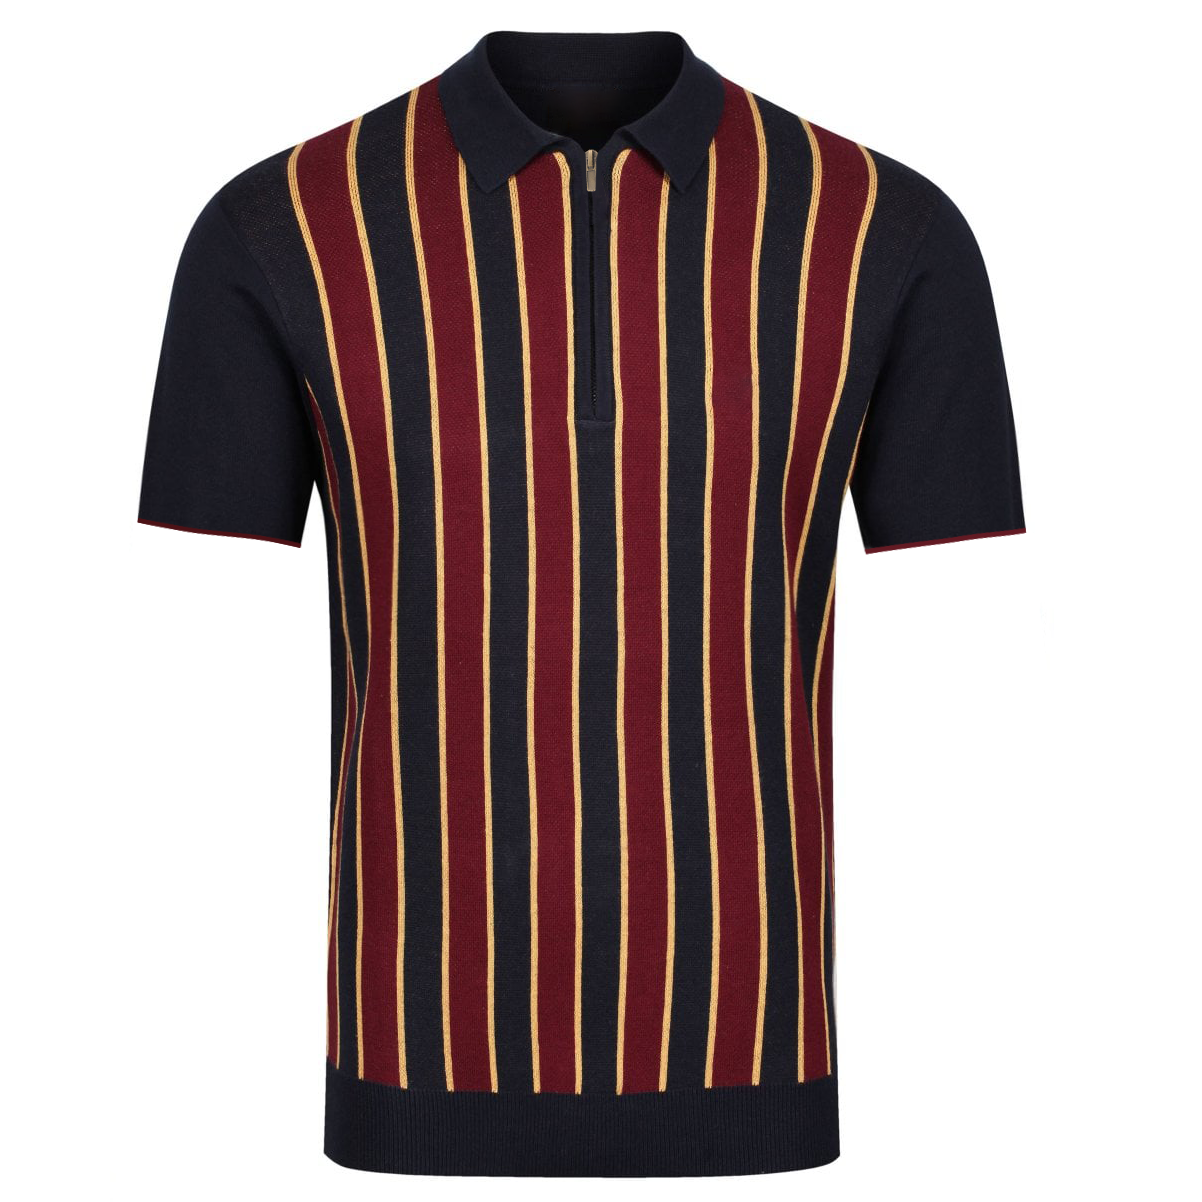 Men's vintage red striped polo knit shirt